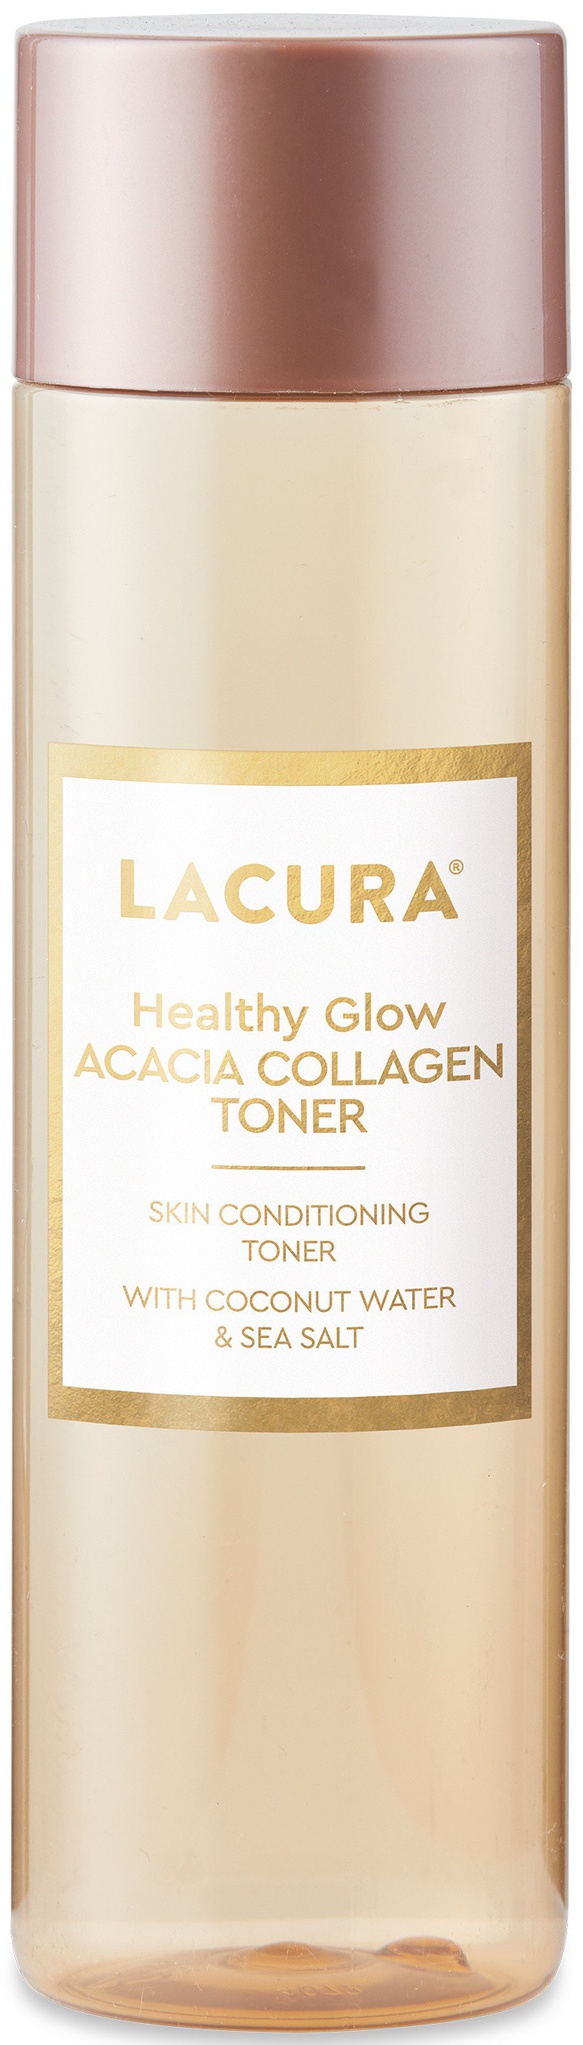 LACURA Acacia Collagen Tonic